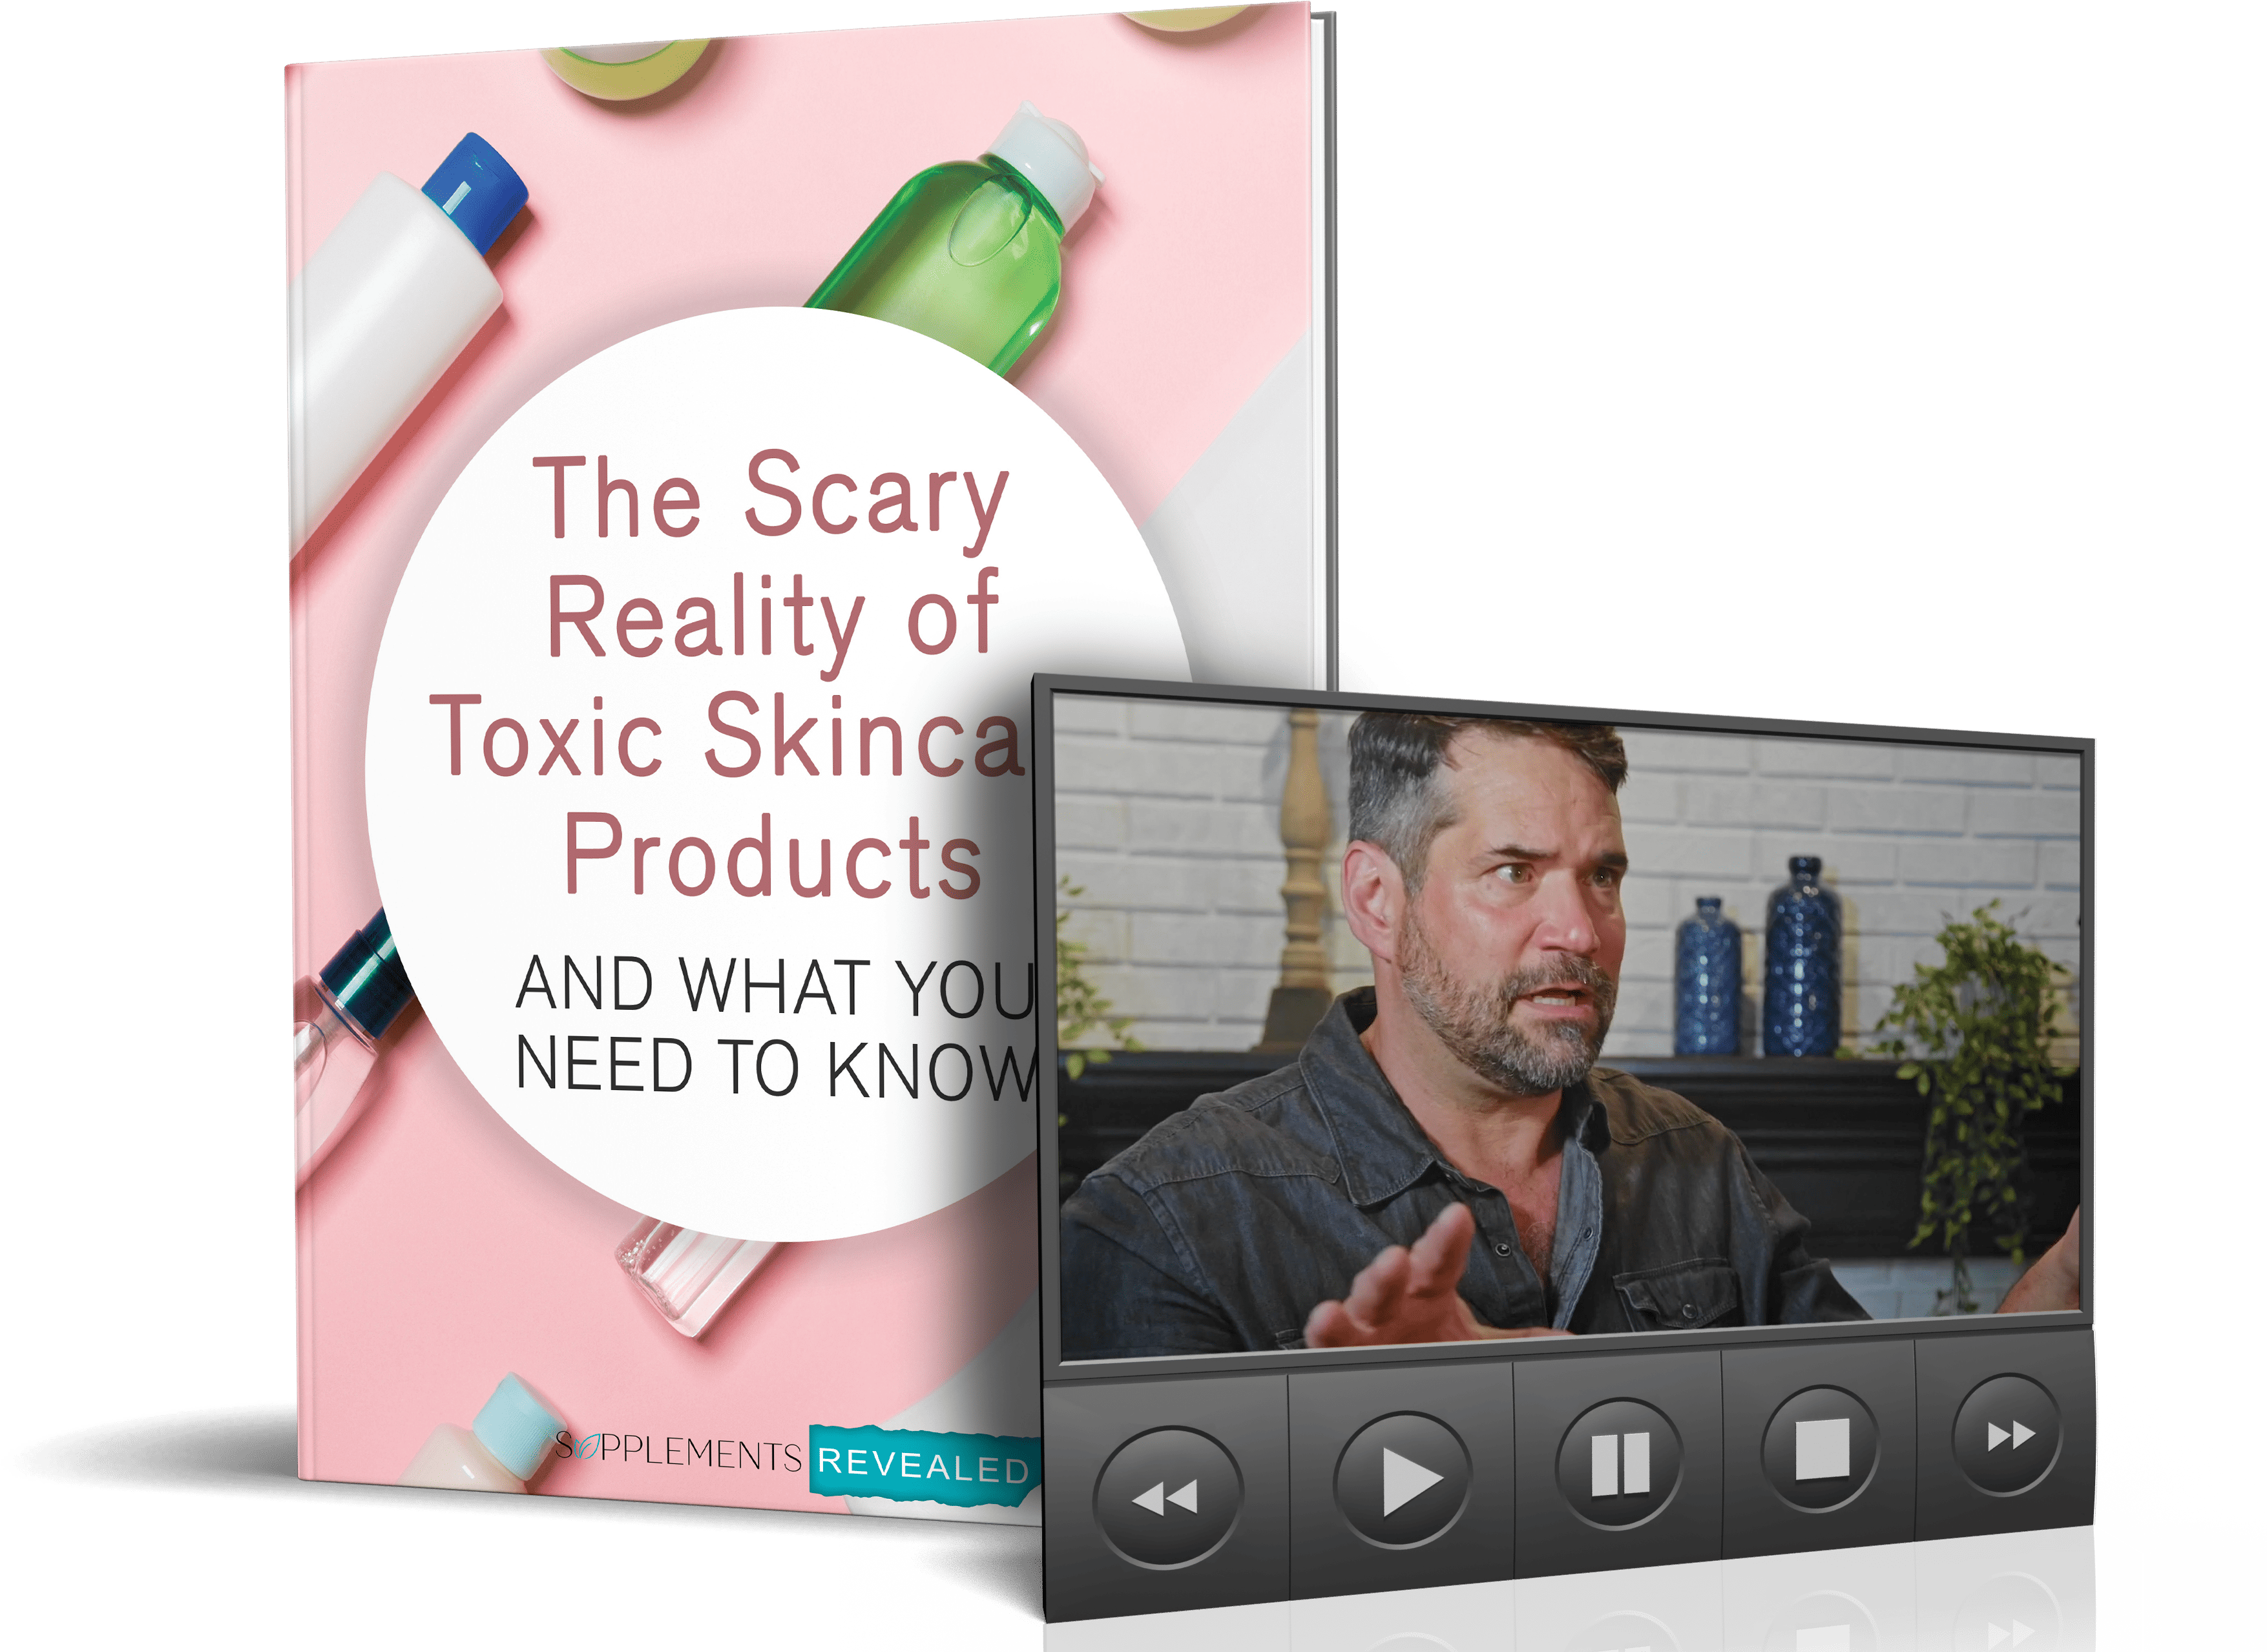 3D Toxic Skincare + Media Player